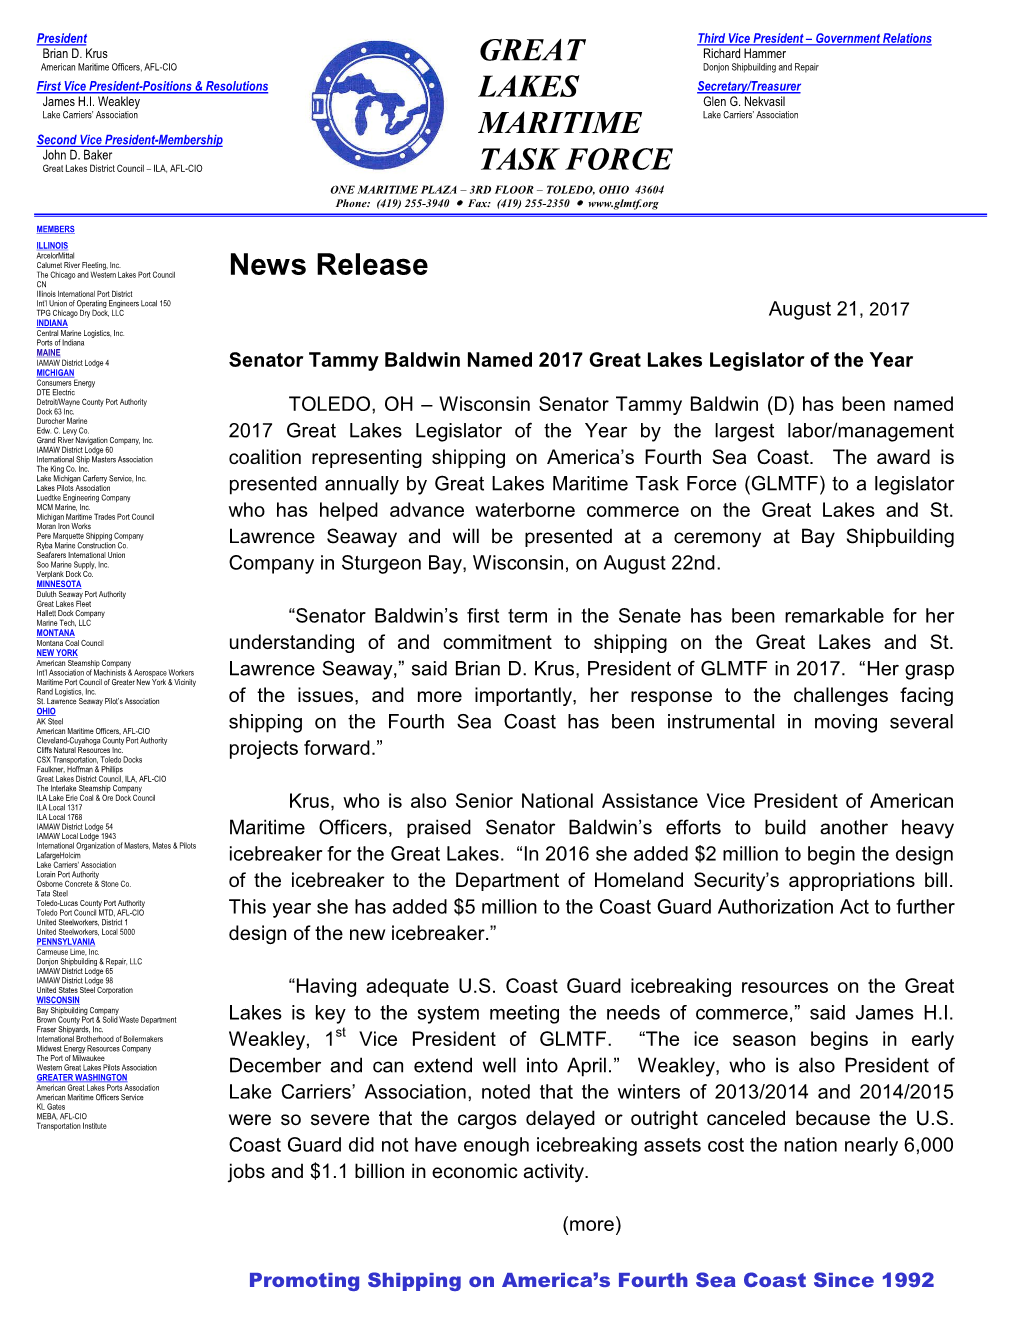 Great Lakes Maritime Task Force (GLMTF) to a Legislator Luedtke Engineering Company MCM Marine, Inc